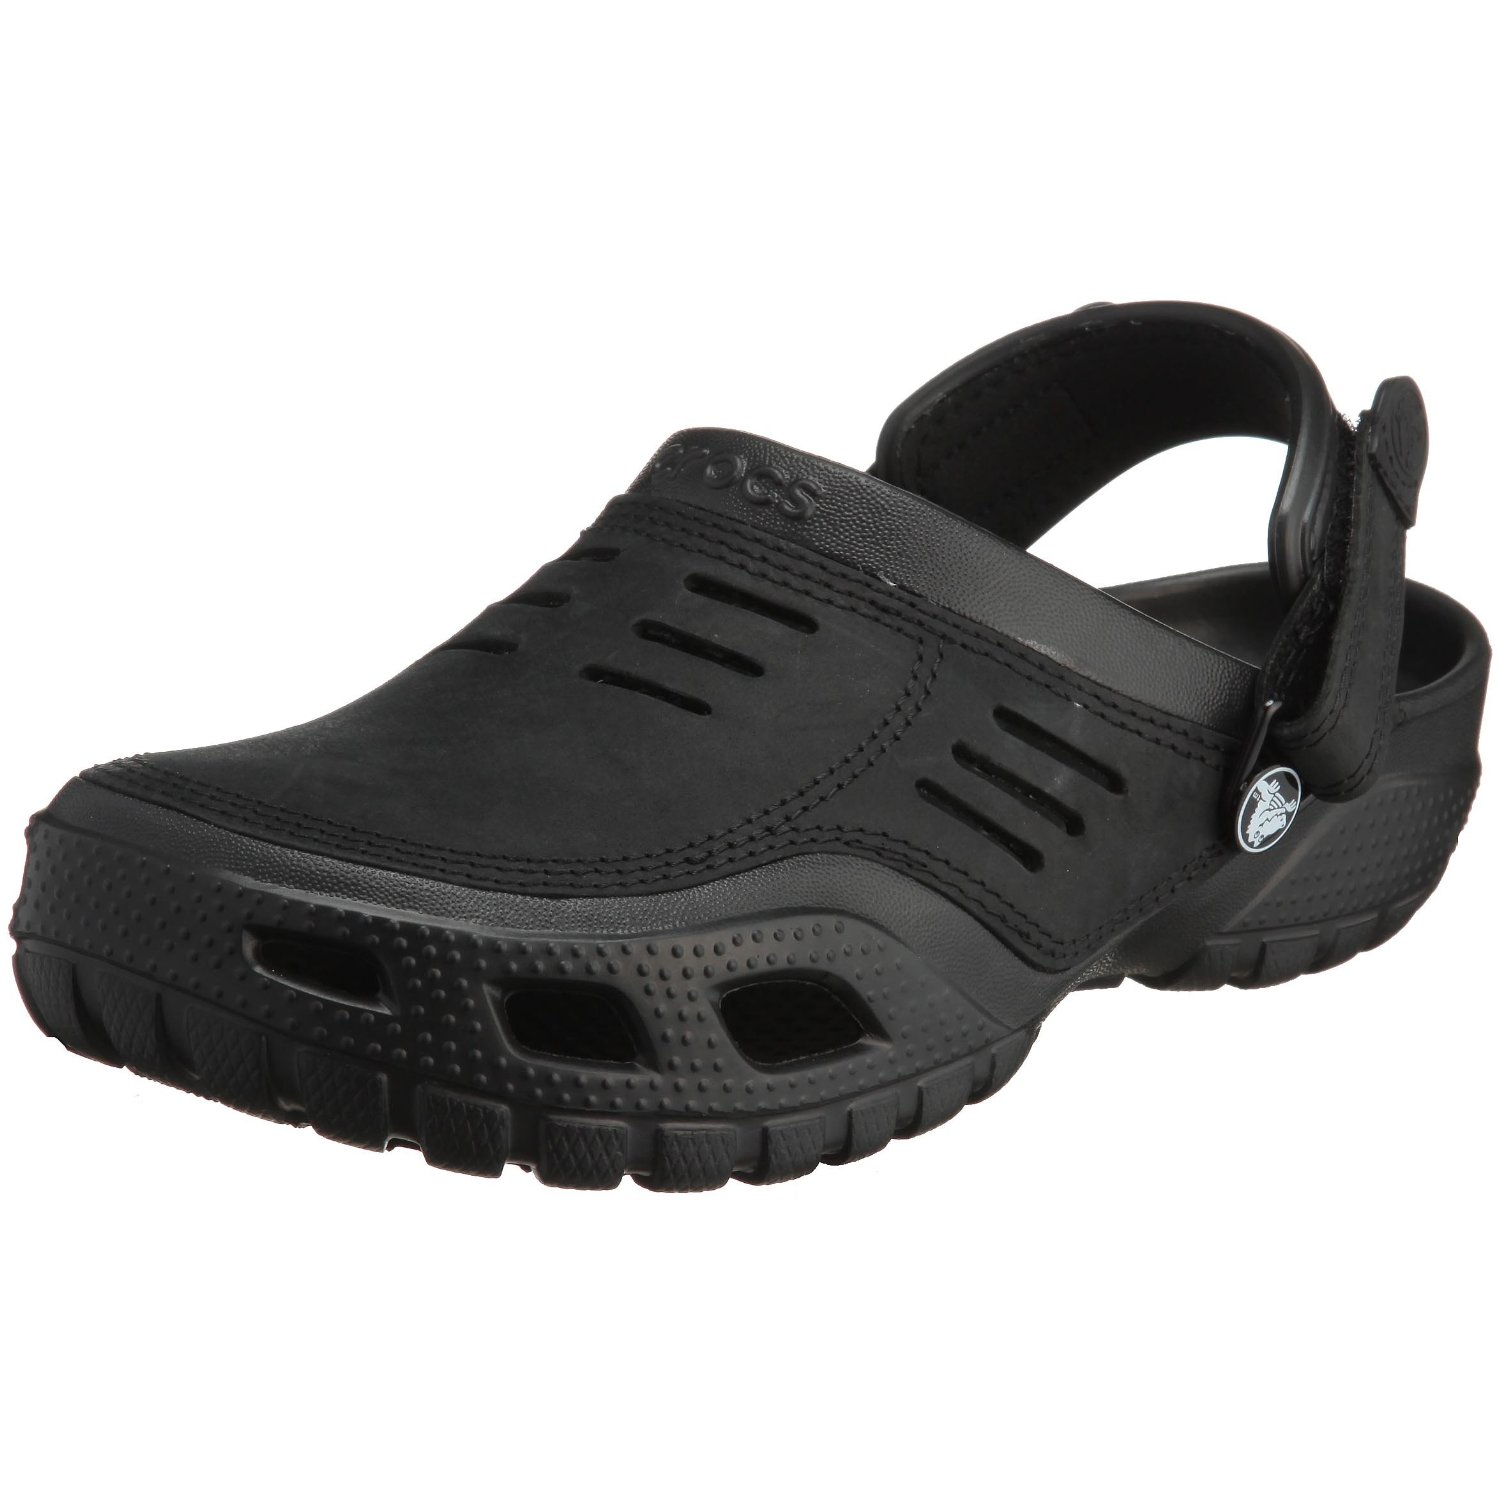 Crocs Shoes: Crocs Men's Yukon Sport Clog